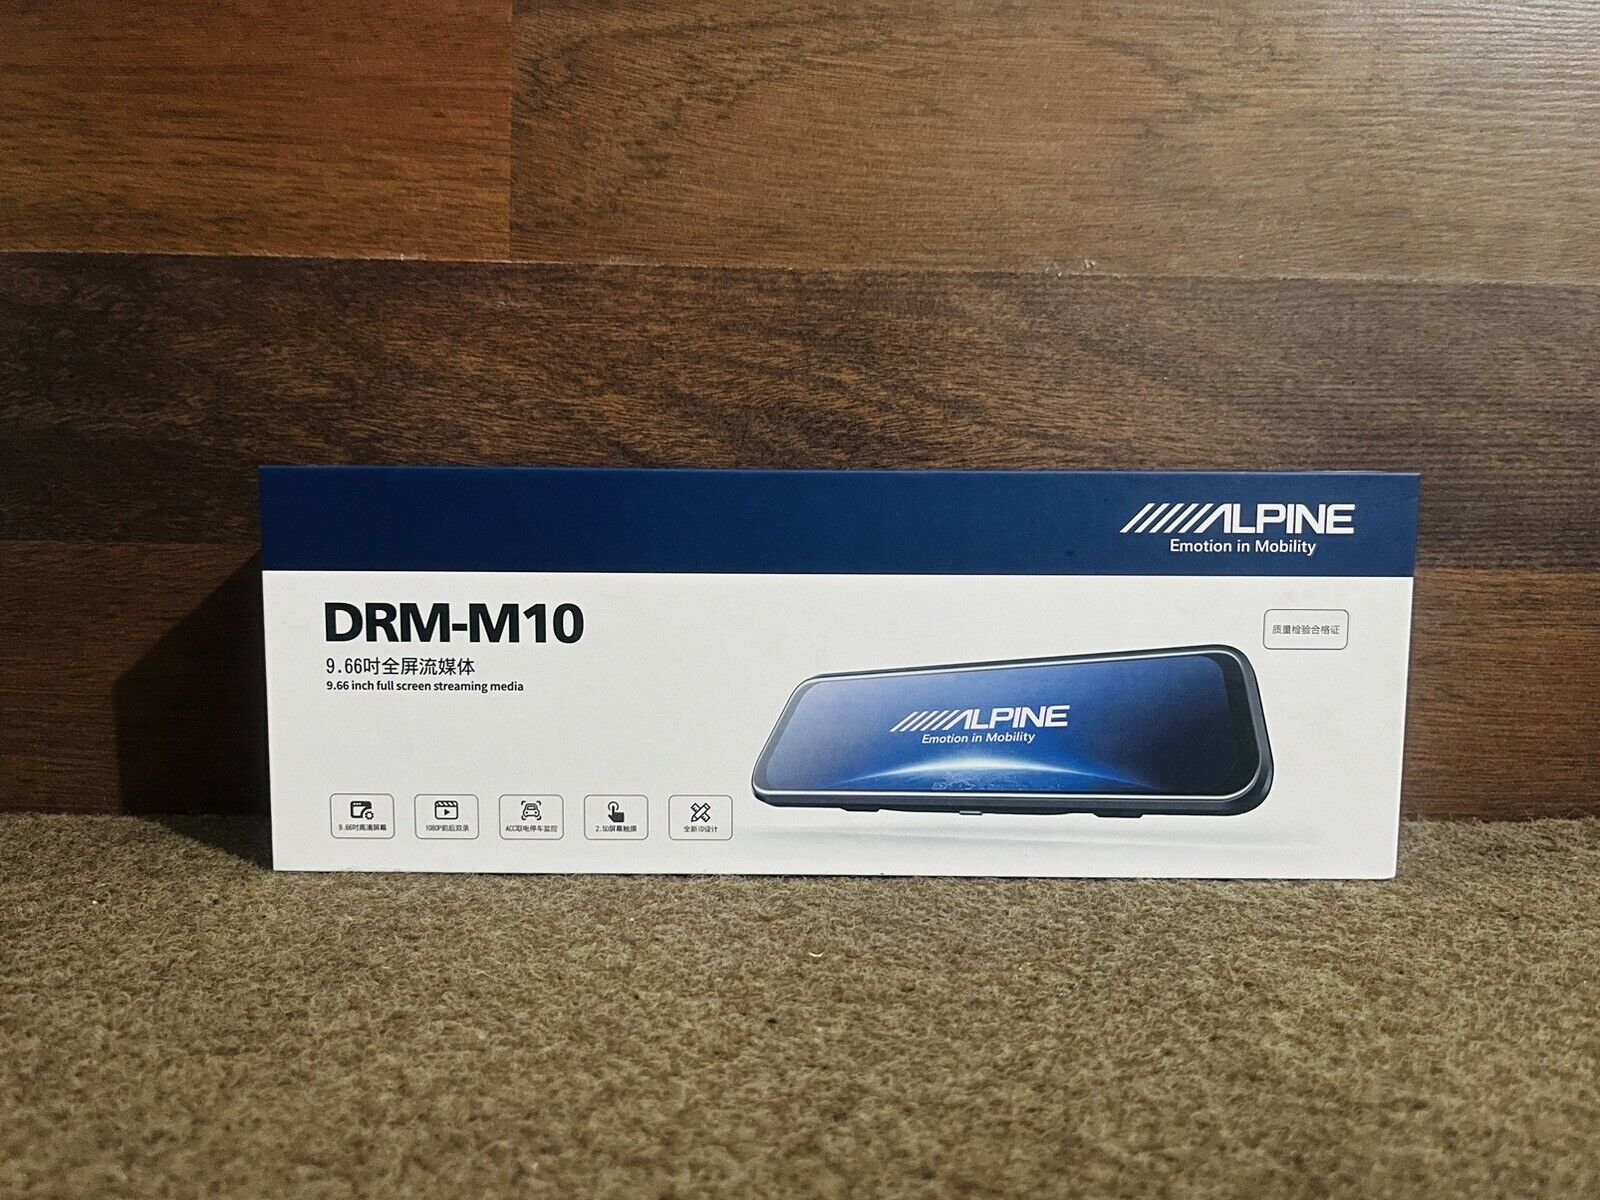 ALPINE DRM-M10 Dashcam 9.66 Inch Full Screen Streaming HD 1080p Rear-1080p Wi-FI